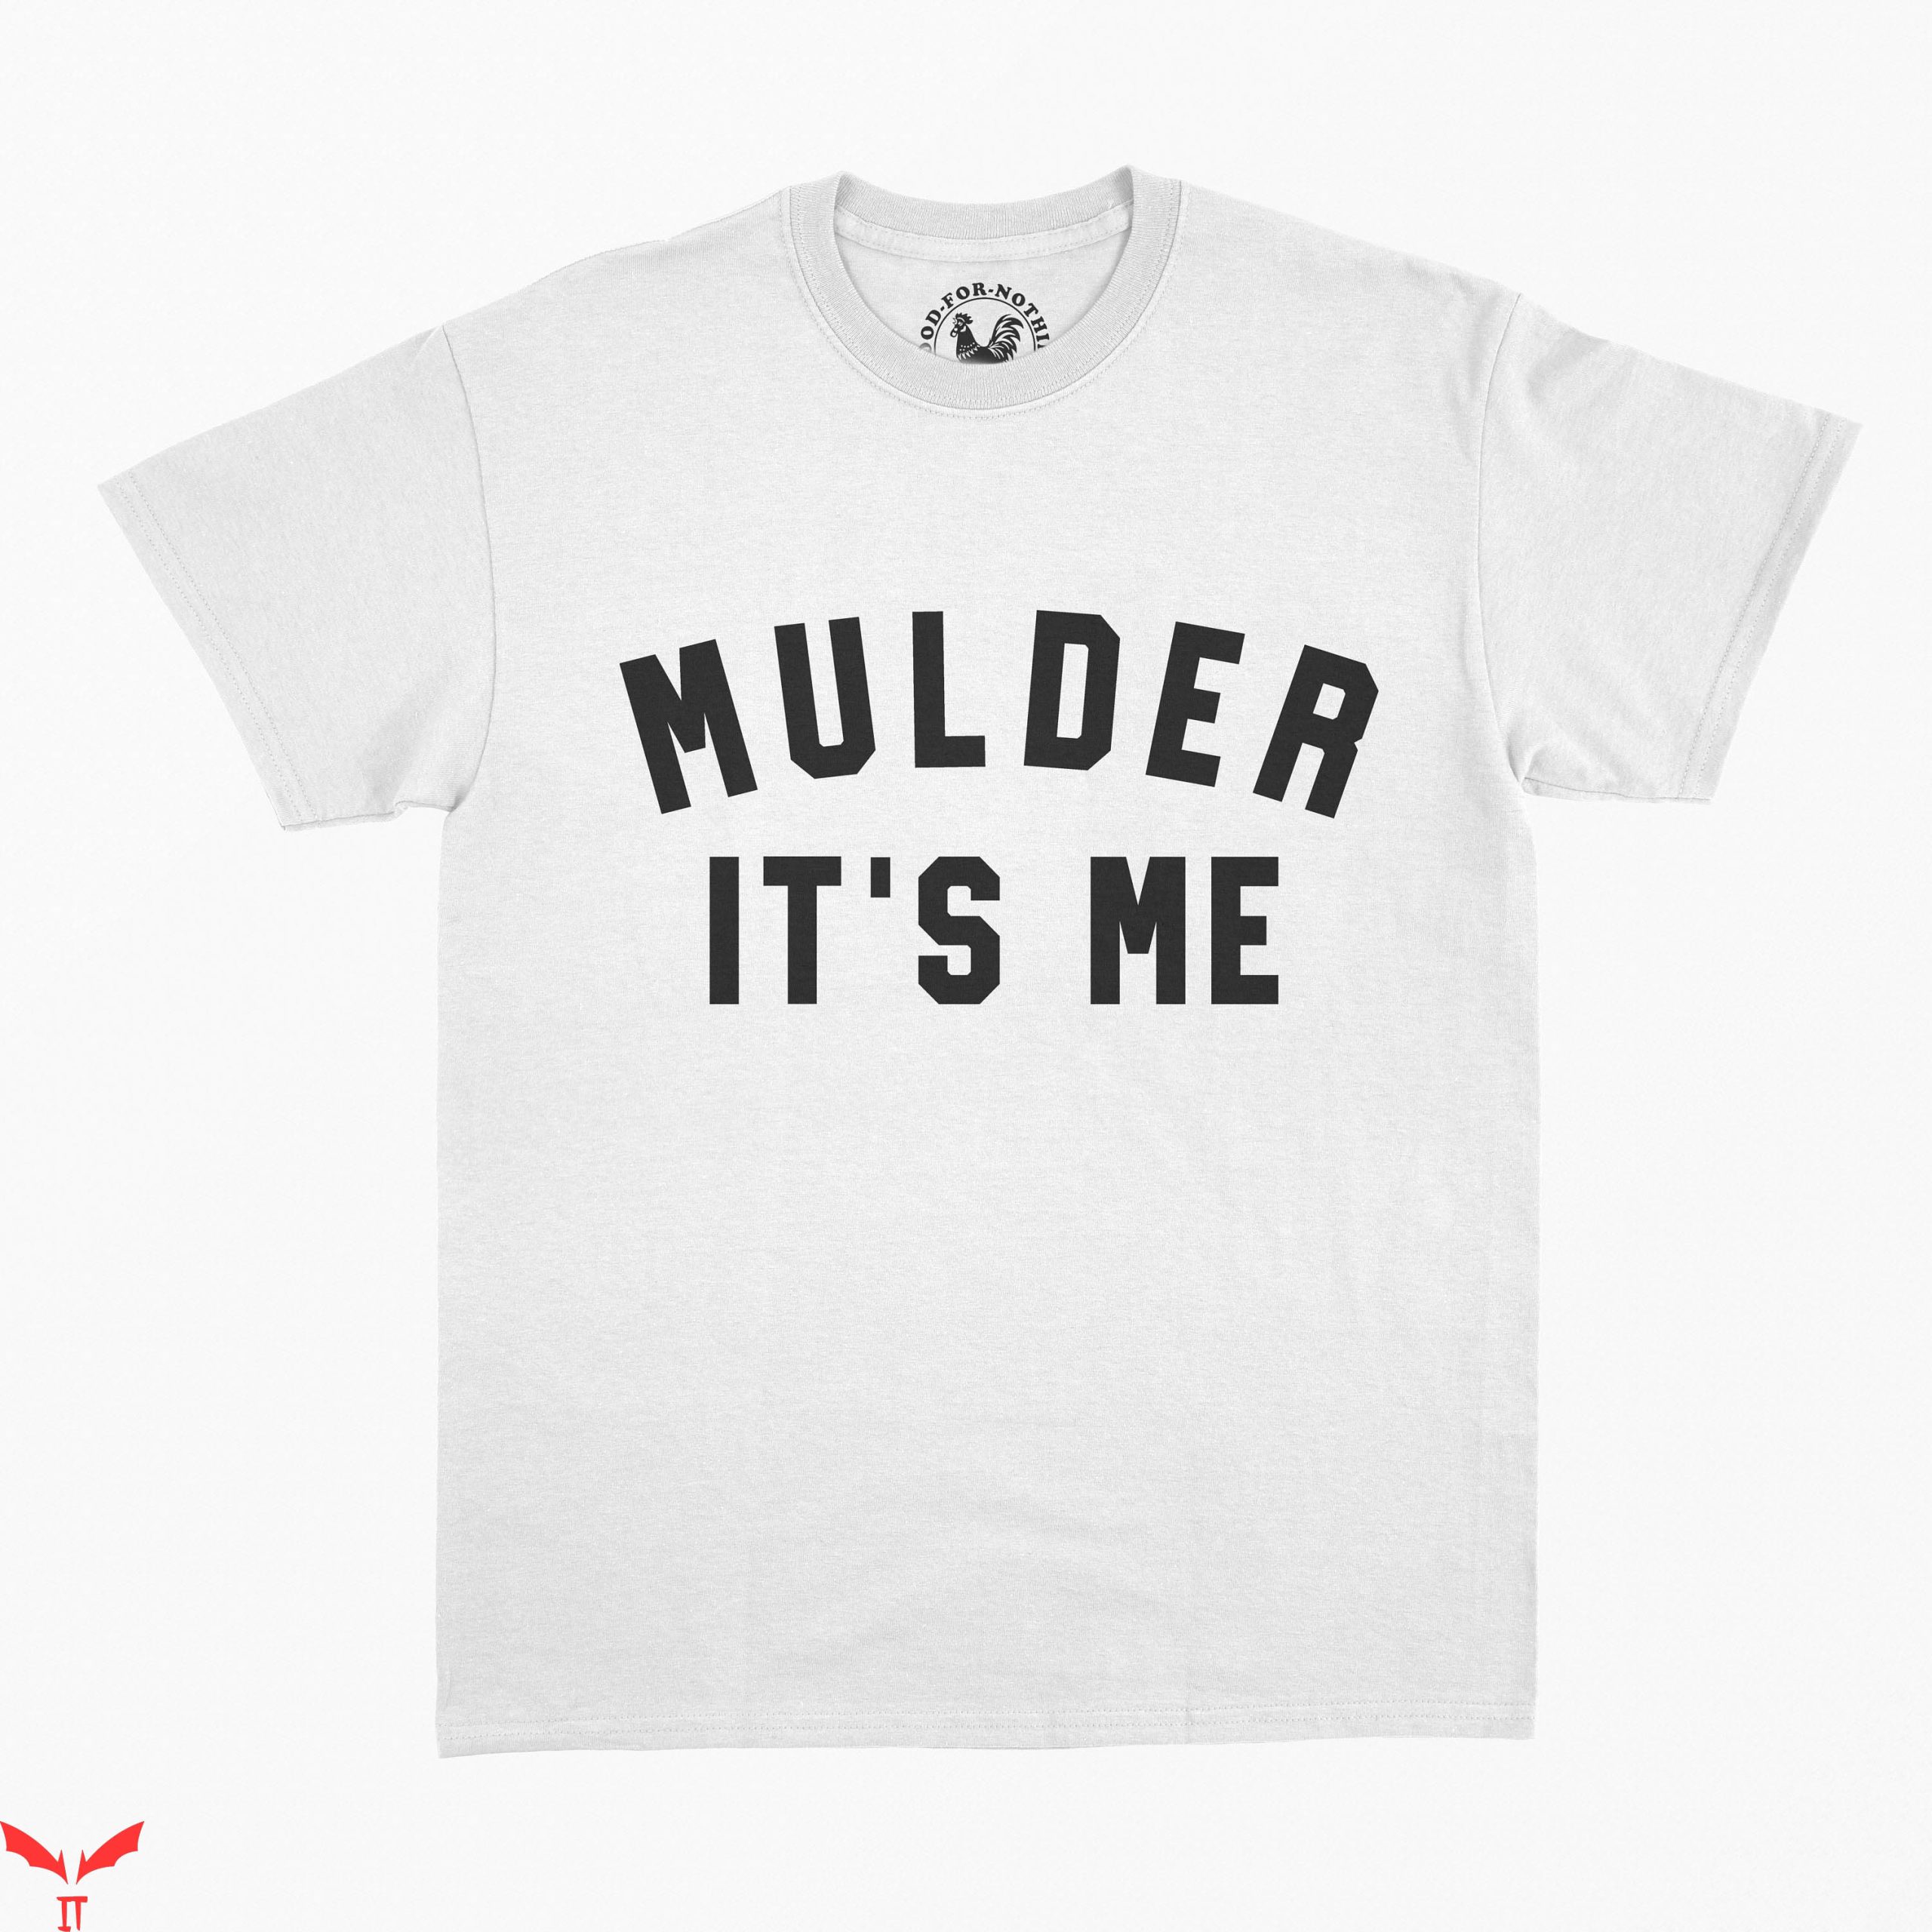 X Files Vintage T-Shirt Mulder It's Me Dana Scully Aliens